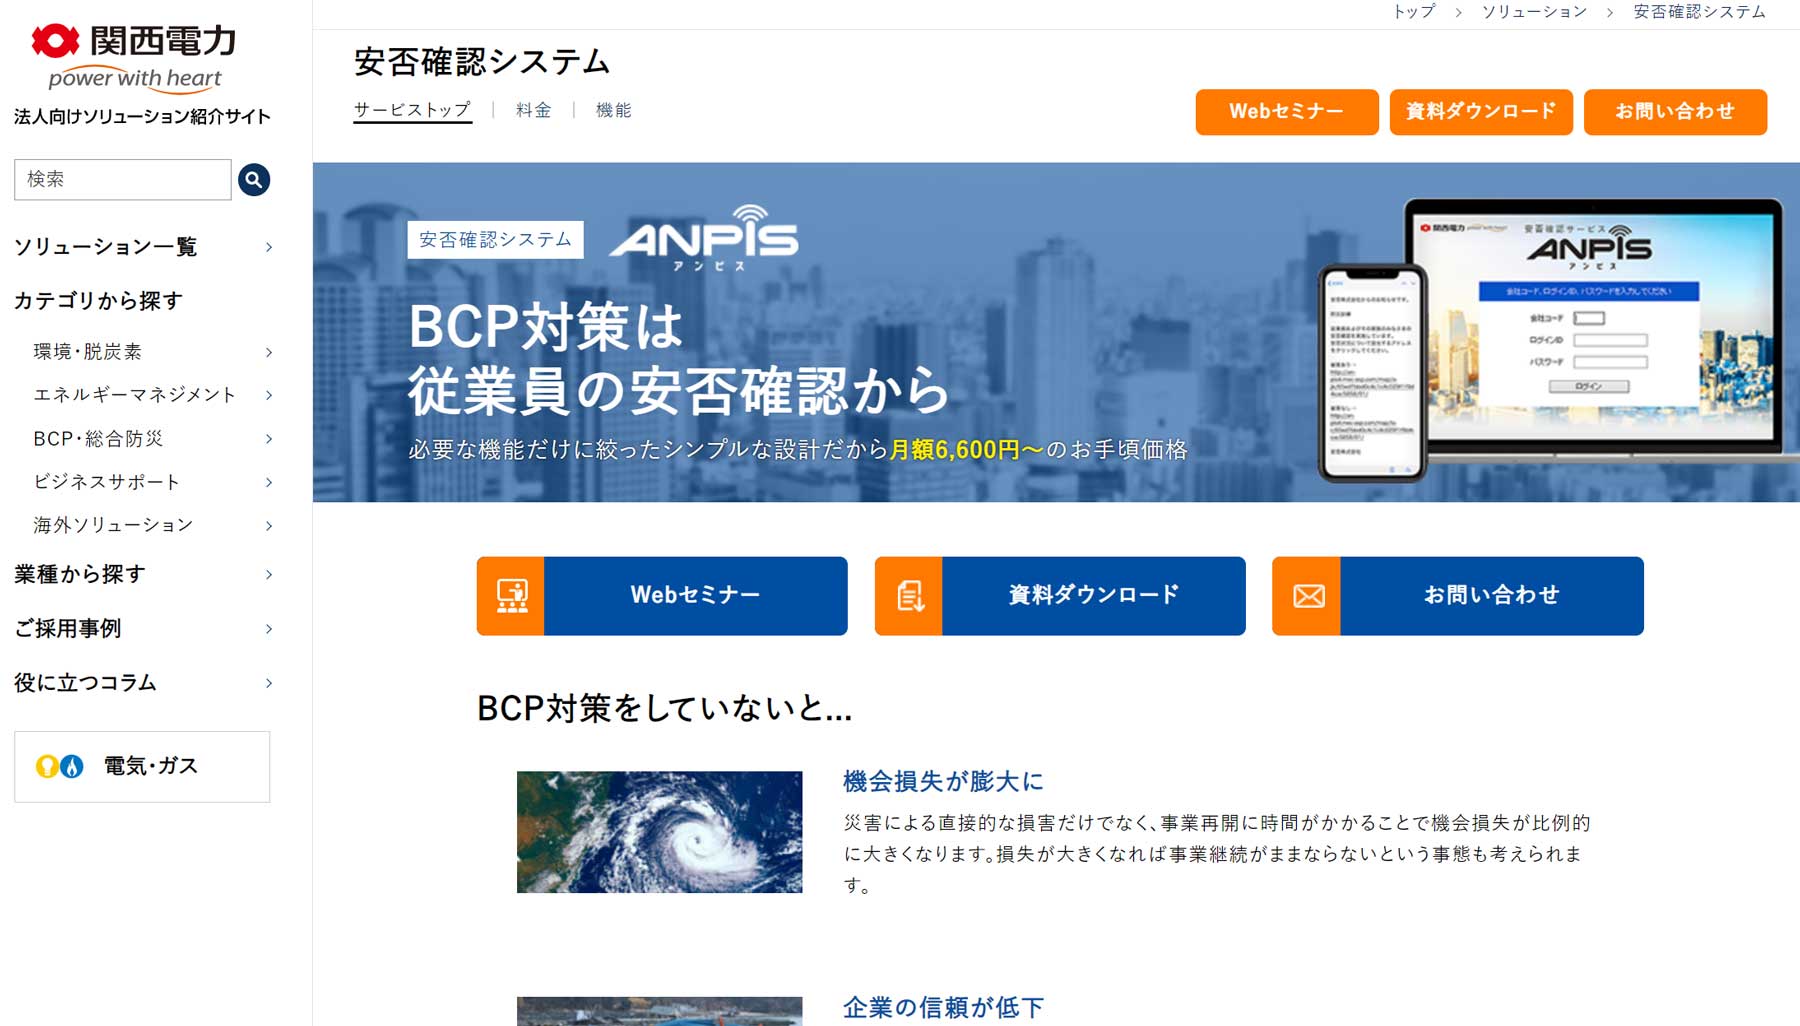 ANPiS公式Webサイト